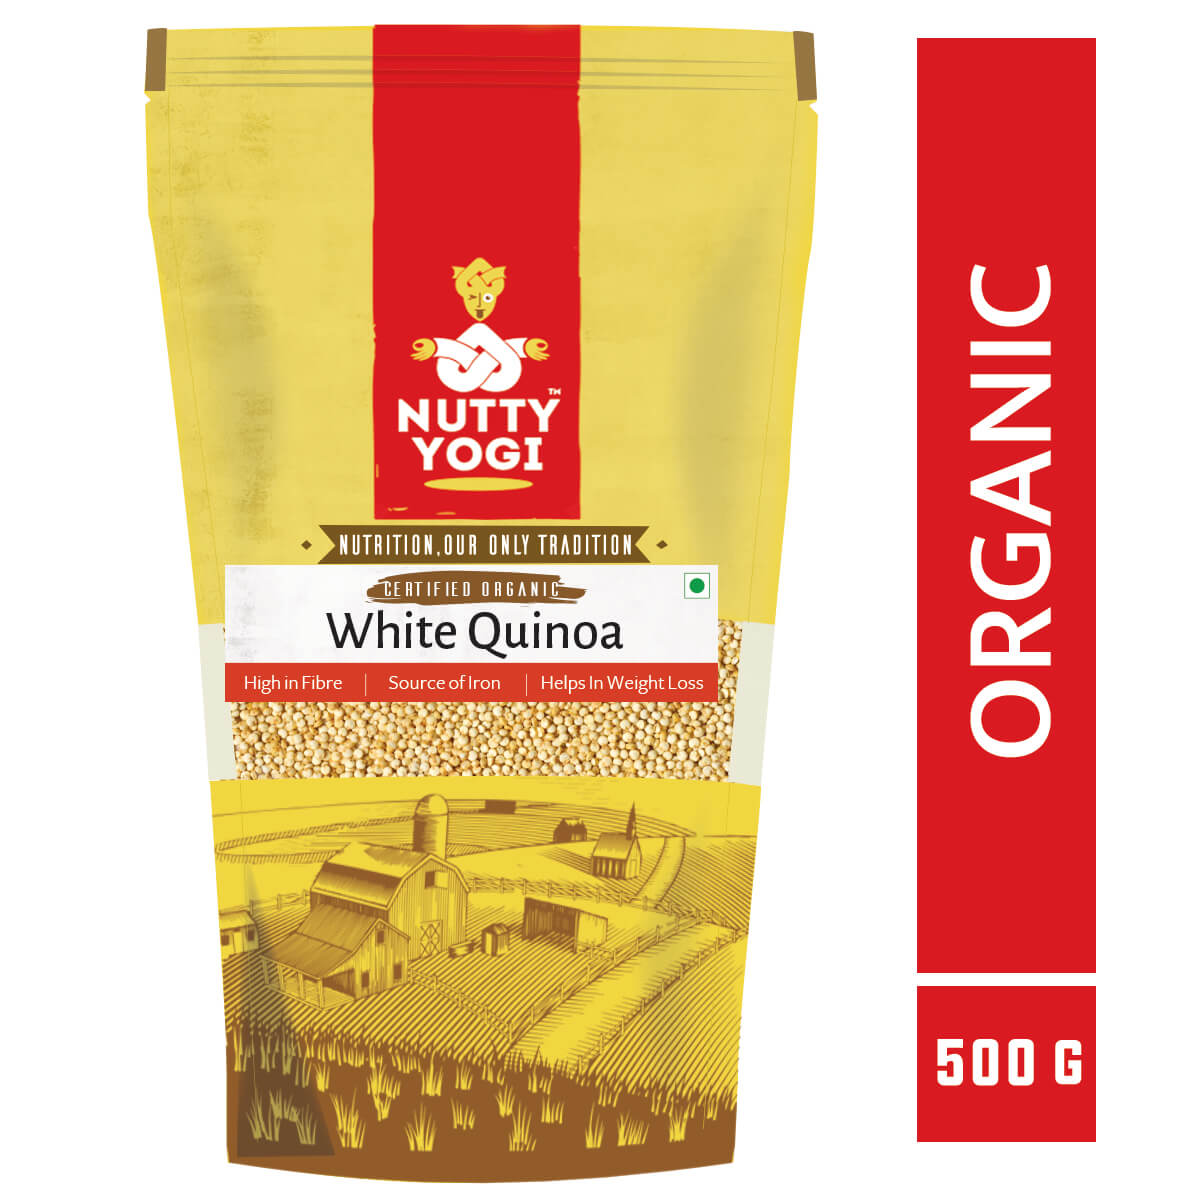 Nutty Yogi Organic White Quinoa